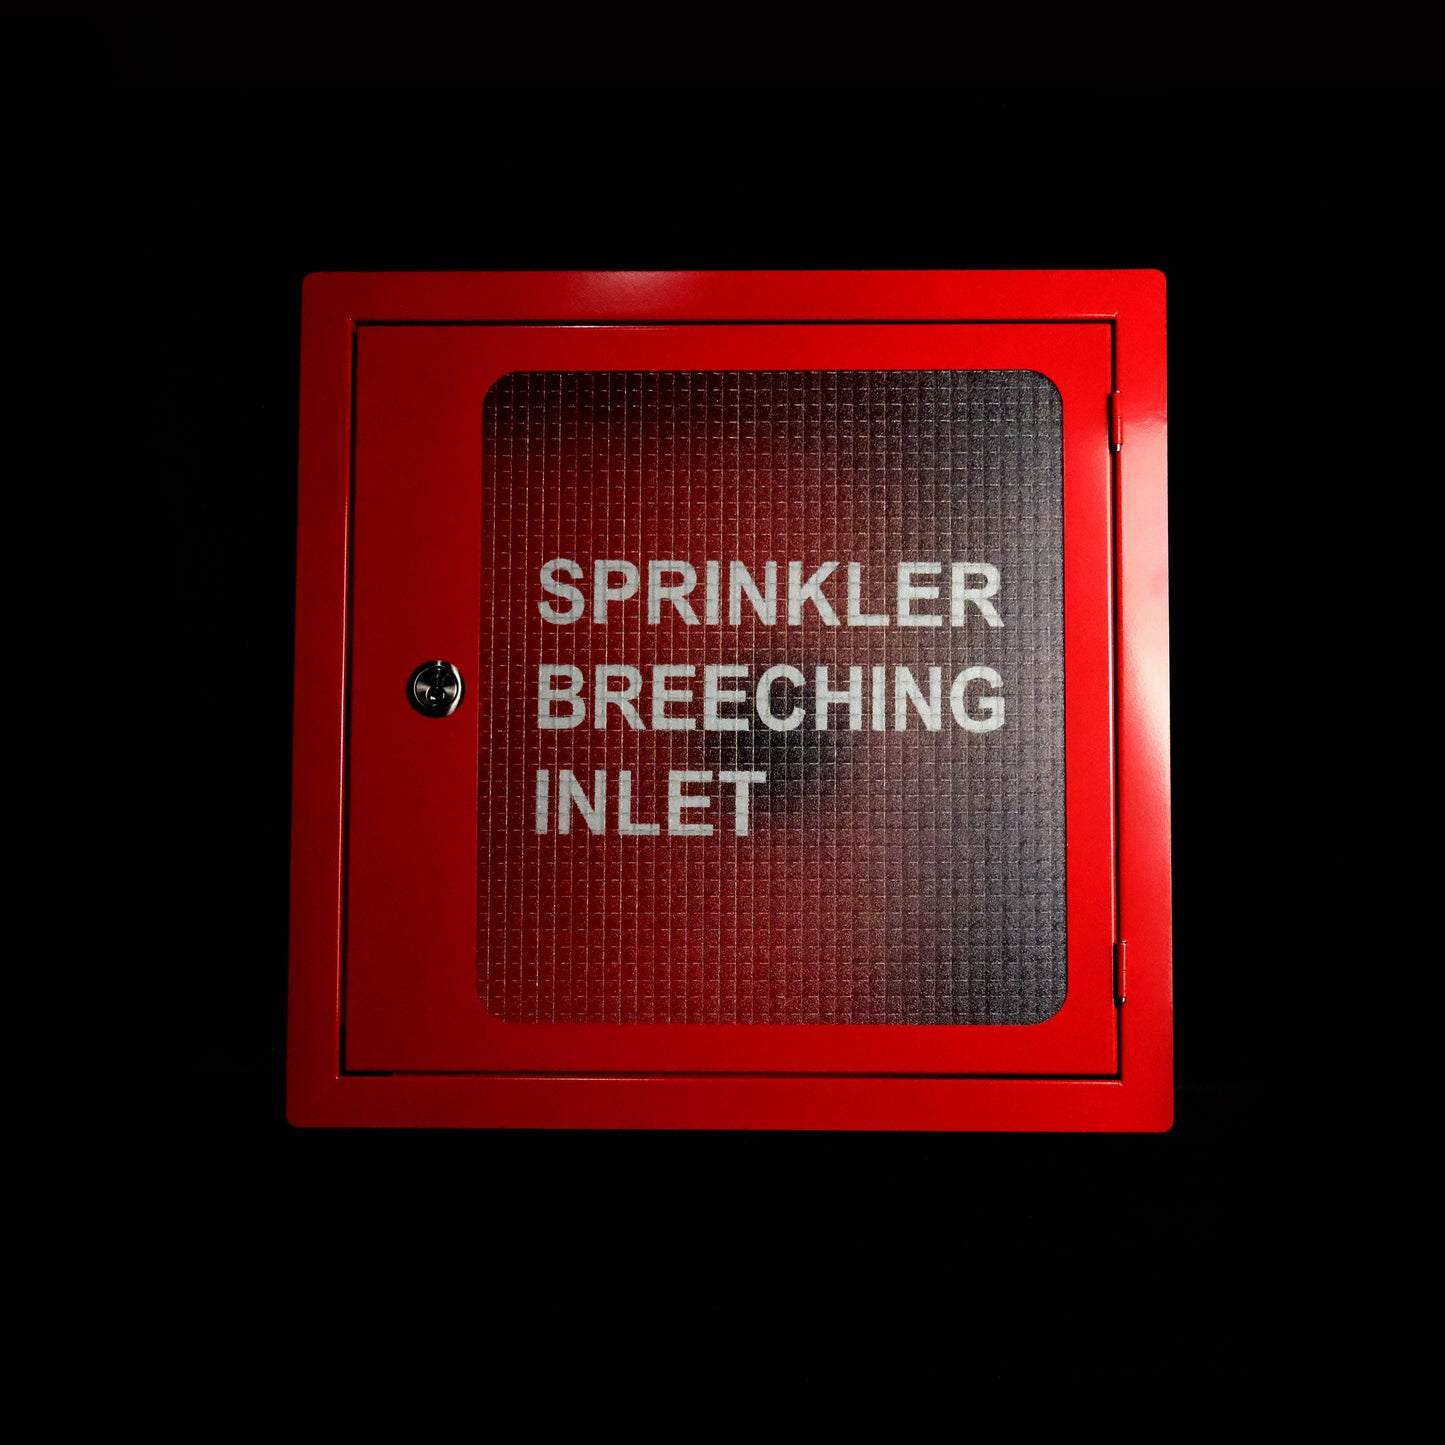 4 Way Sprinkler Breeching Inlet Recess Cabinet